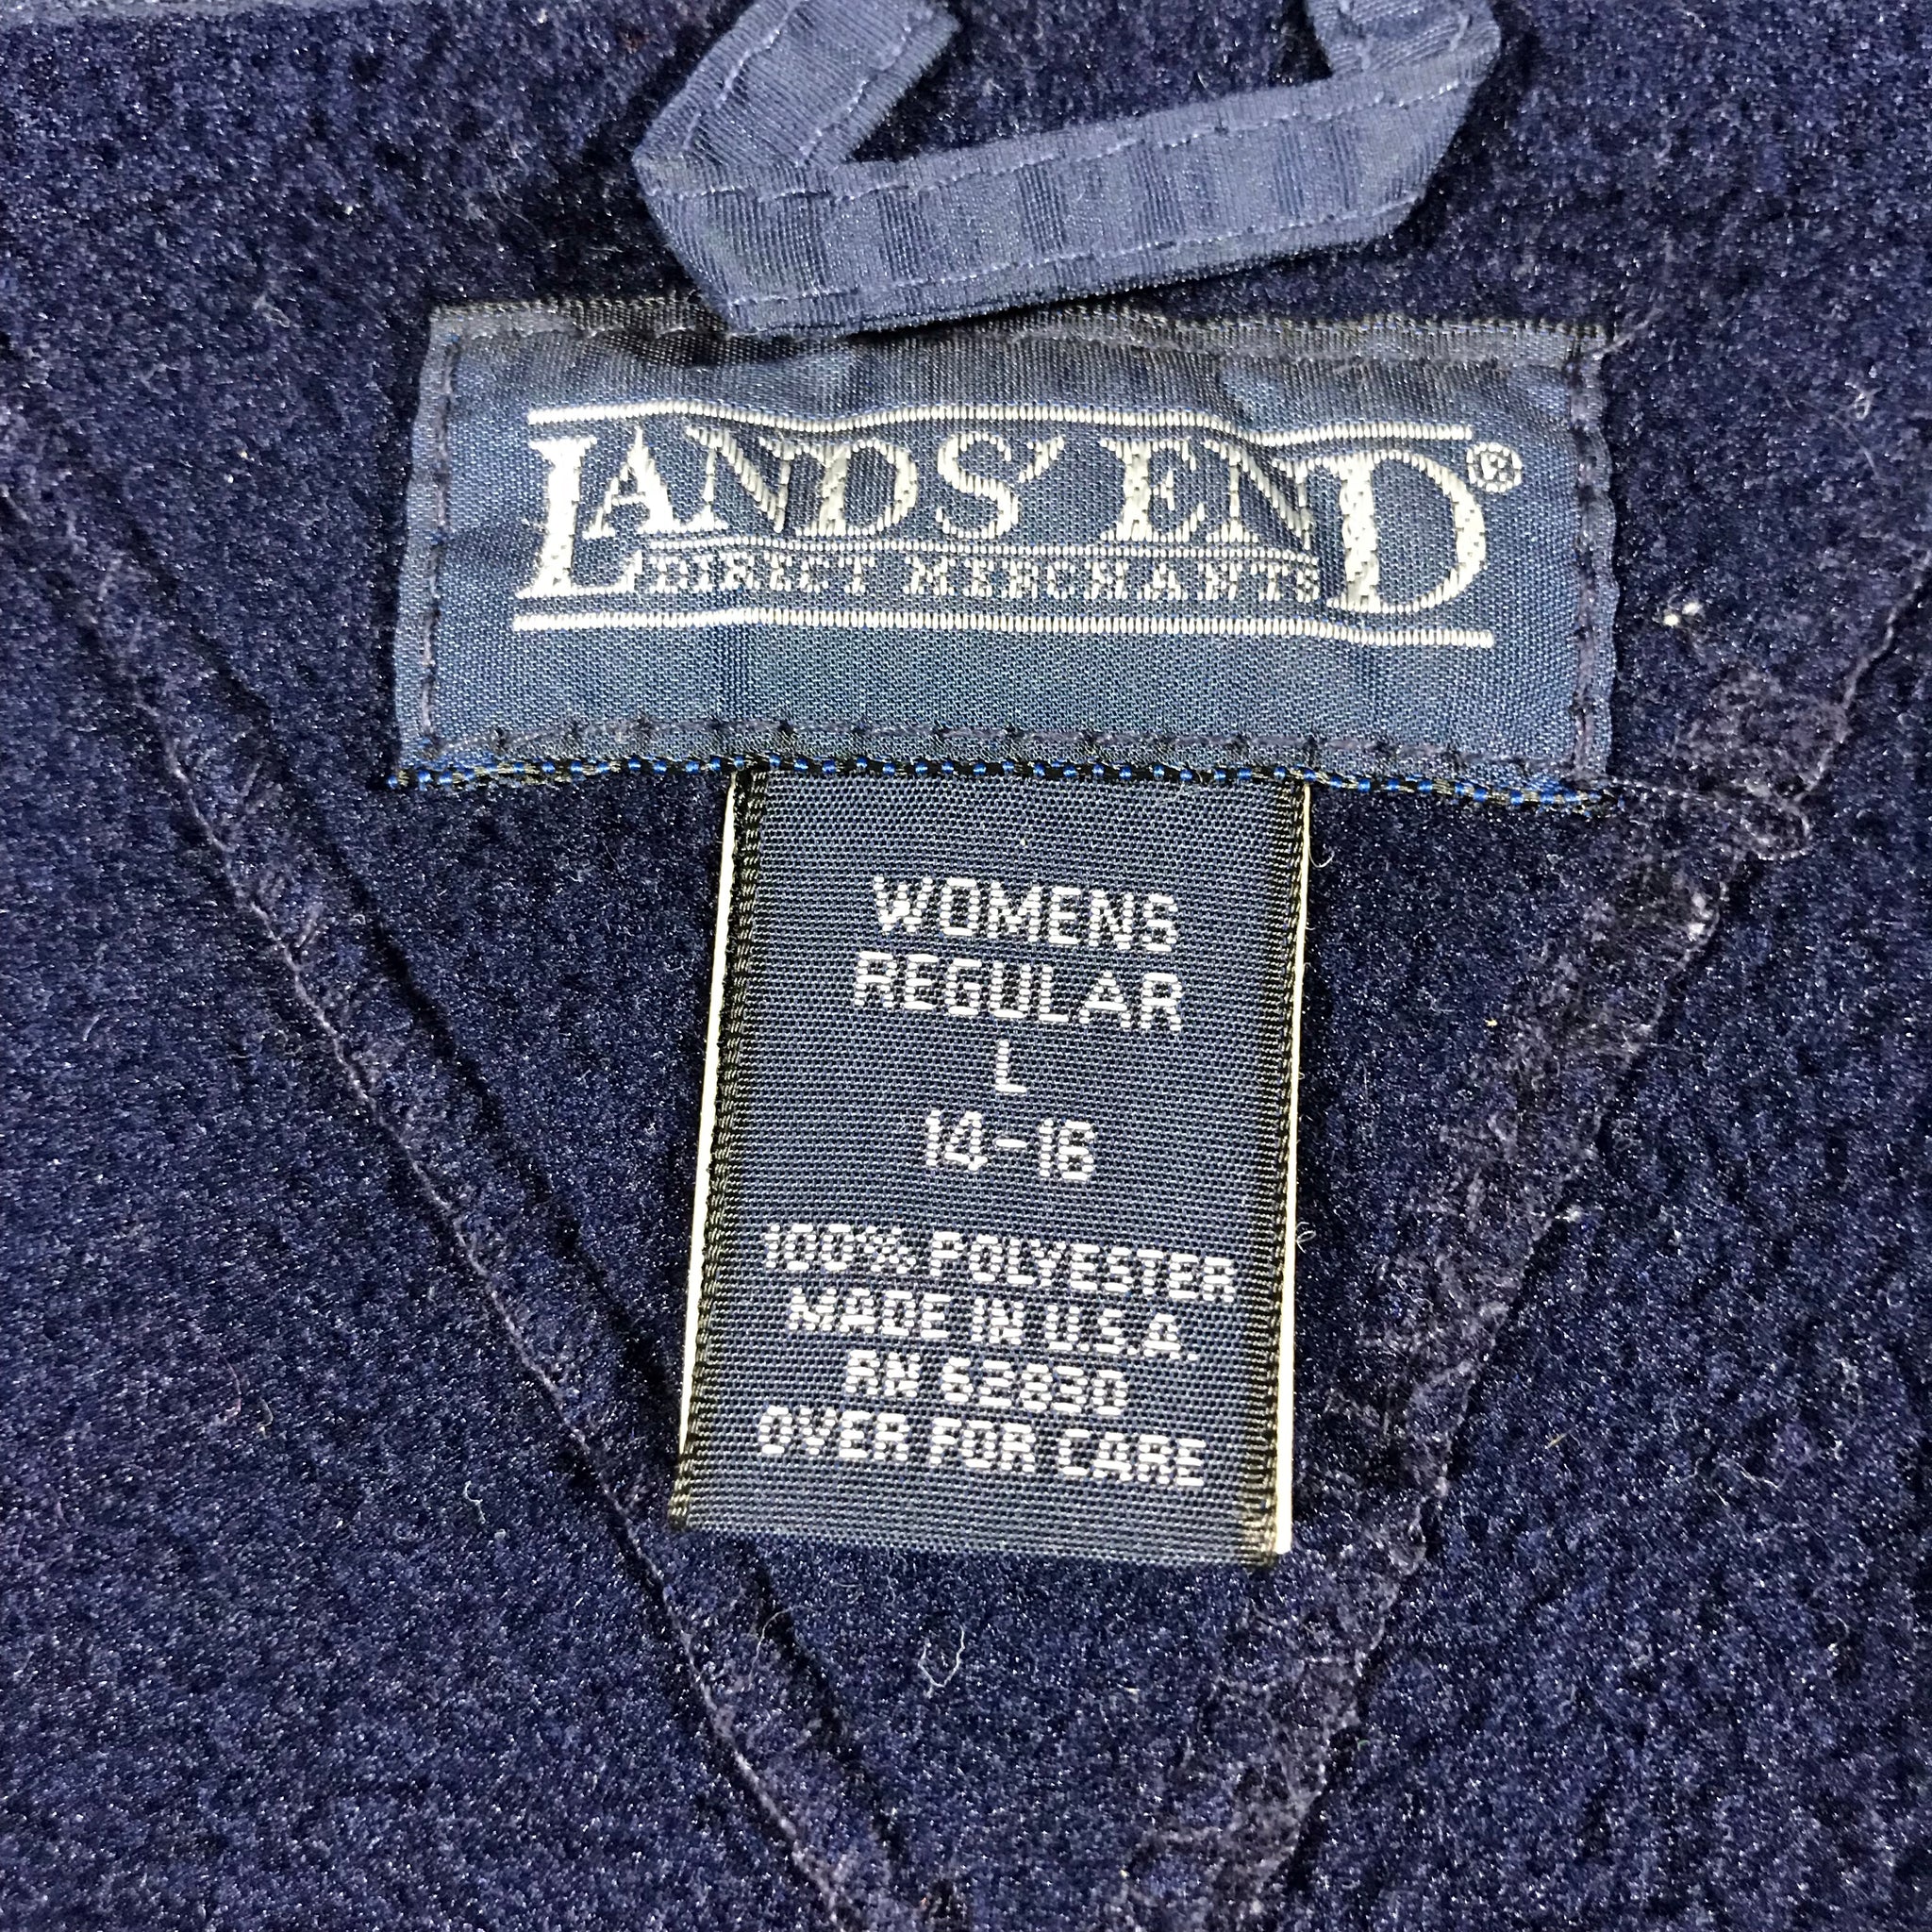 Landsend fleece coat. made in usa. large